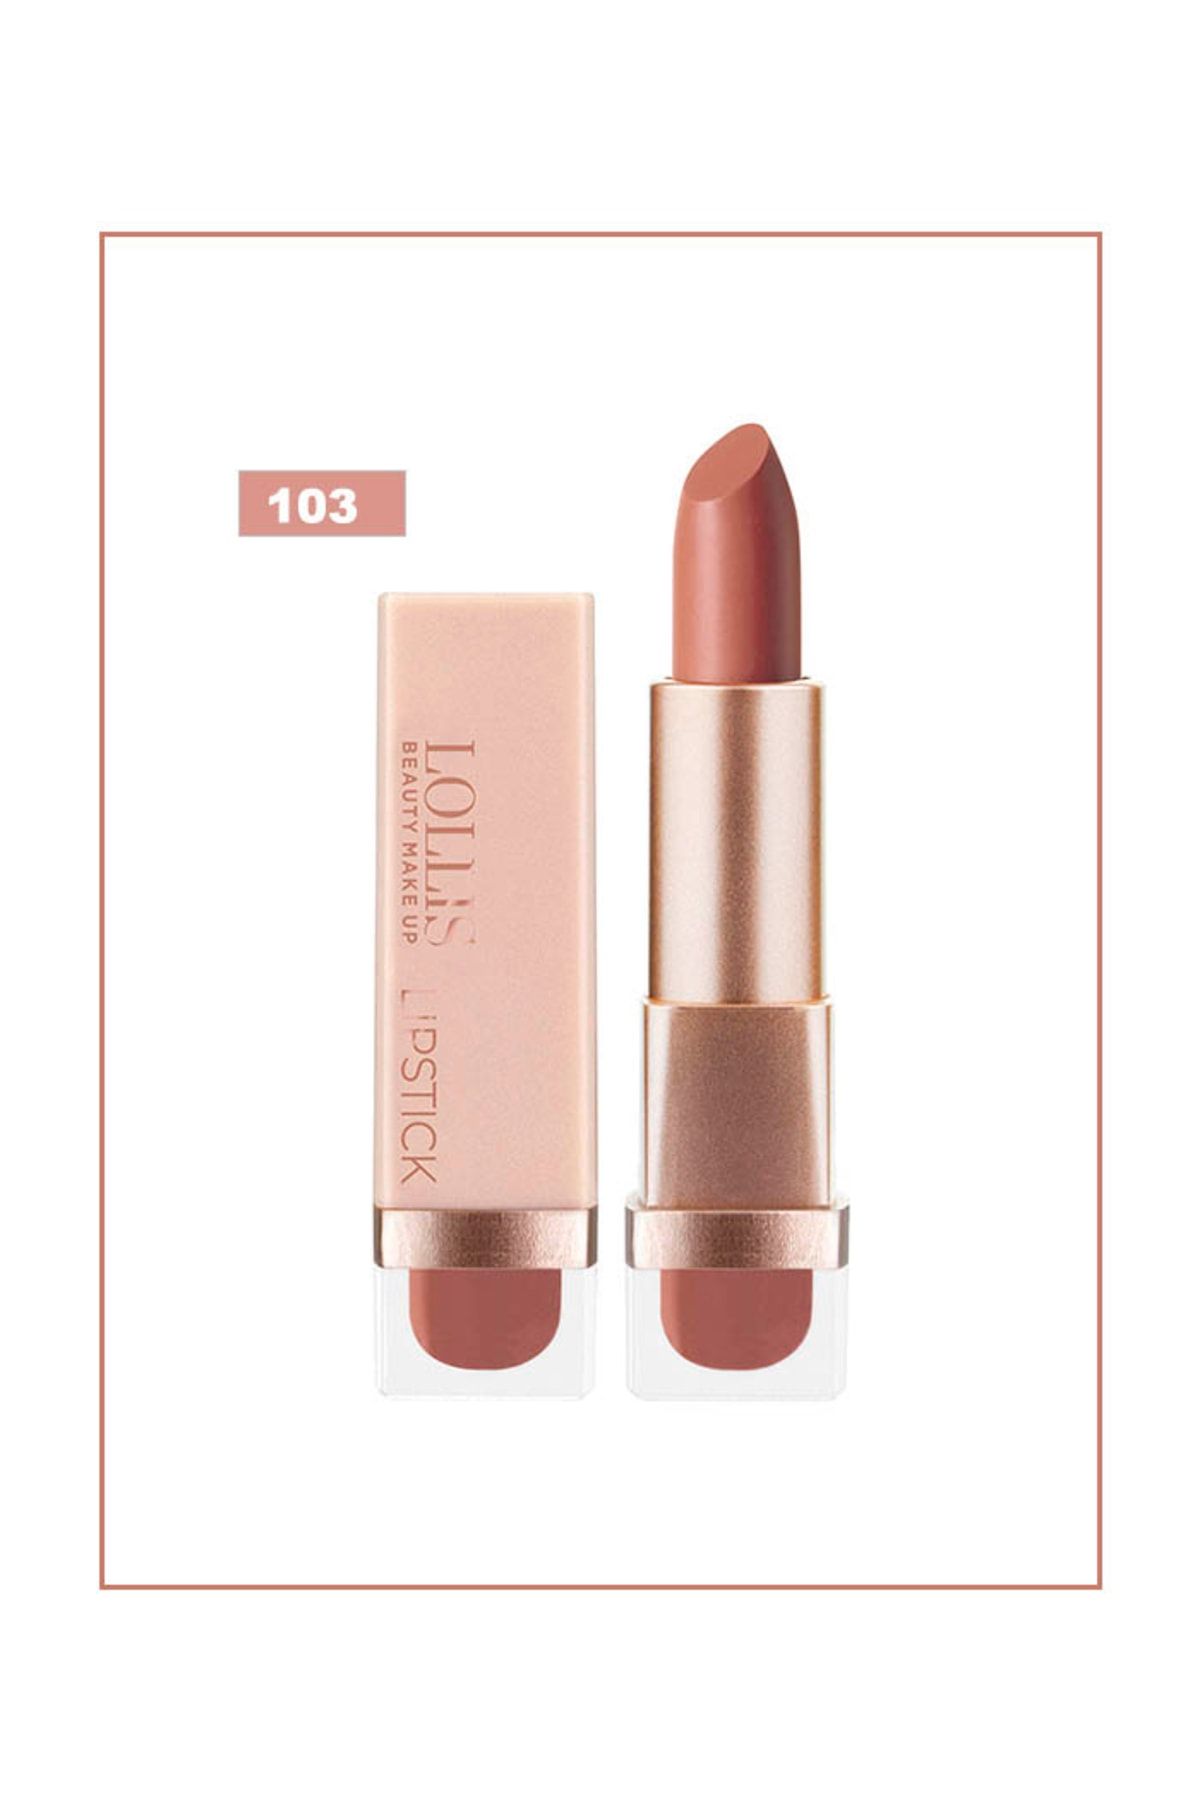 Lollis Lipstick 103 / Ruj 103